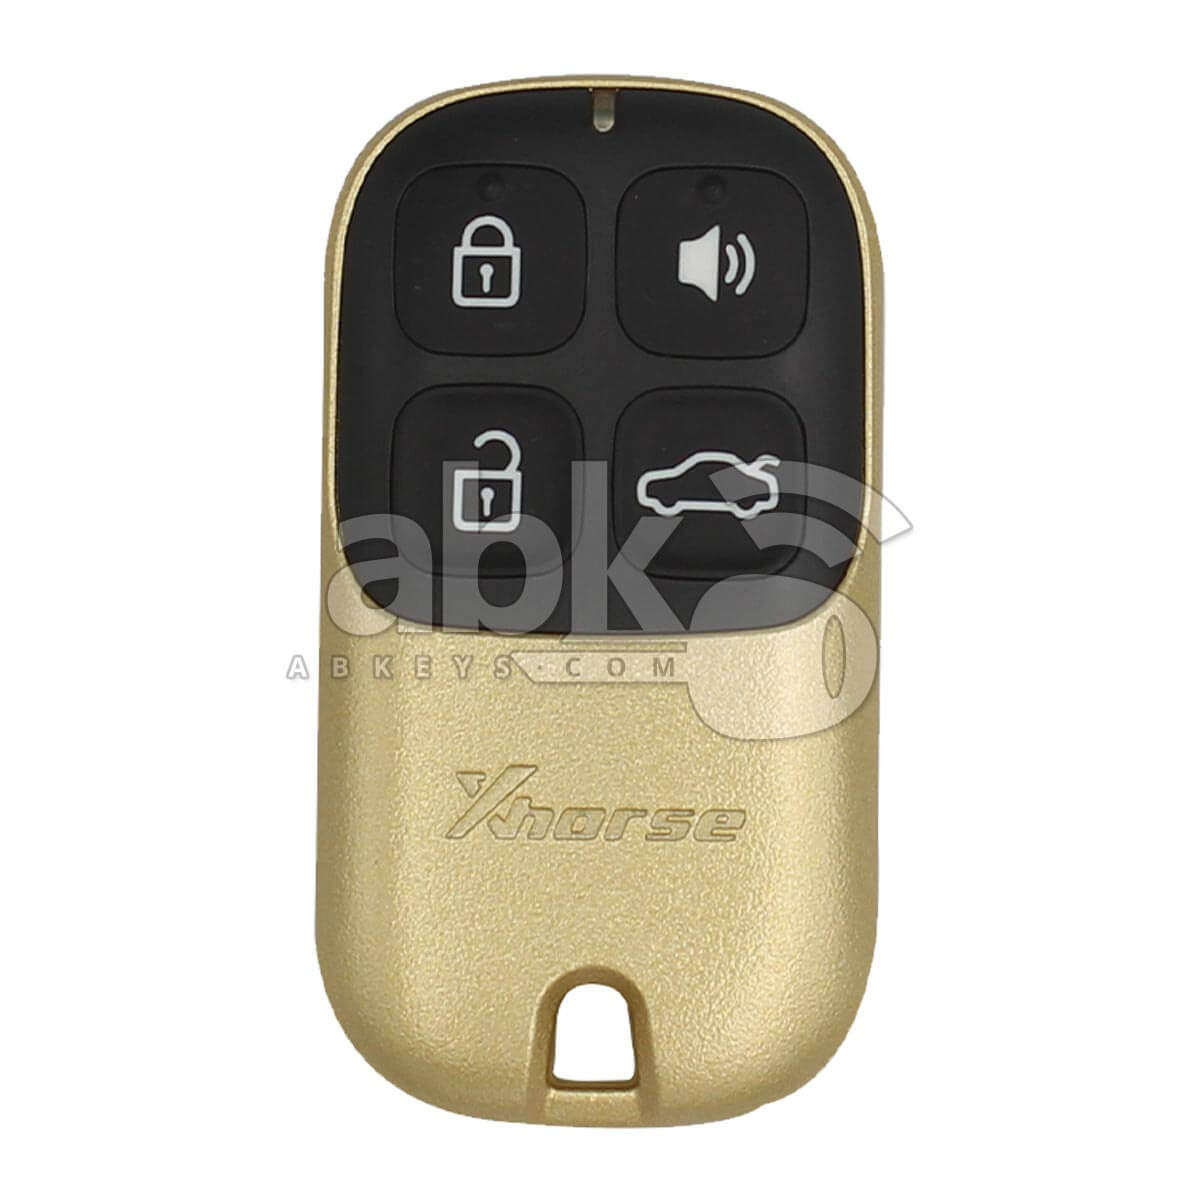 Xhorse VVDI Key Tool VVDI2 Golden Wired Remote Control 4Buttons XKXH02EN - ABK-1015-XKXH02EN - 